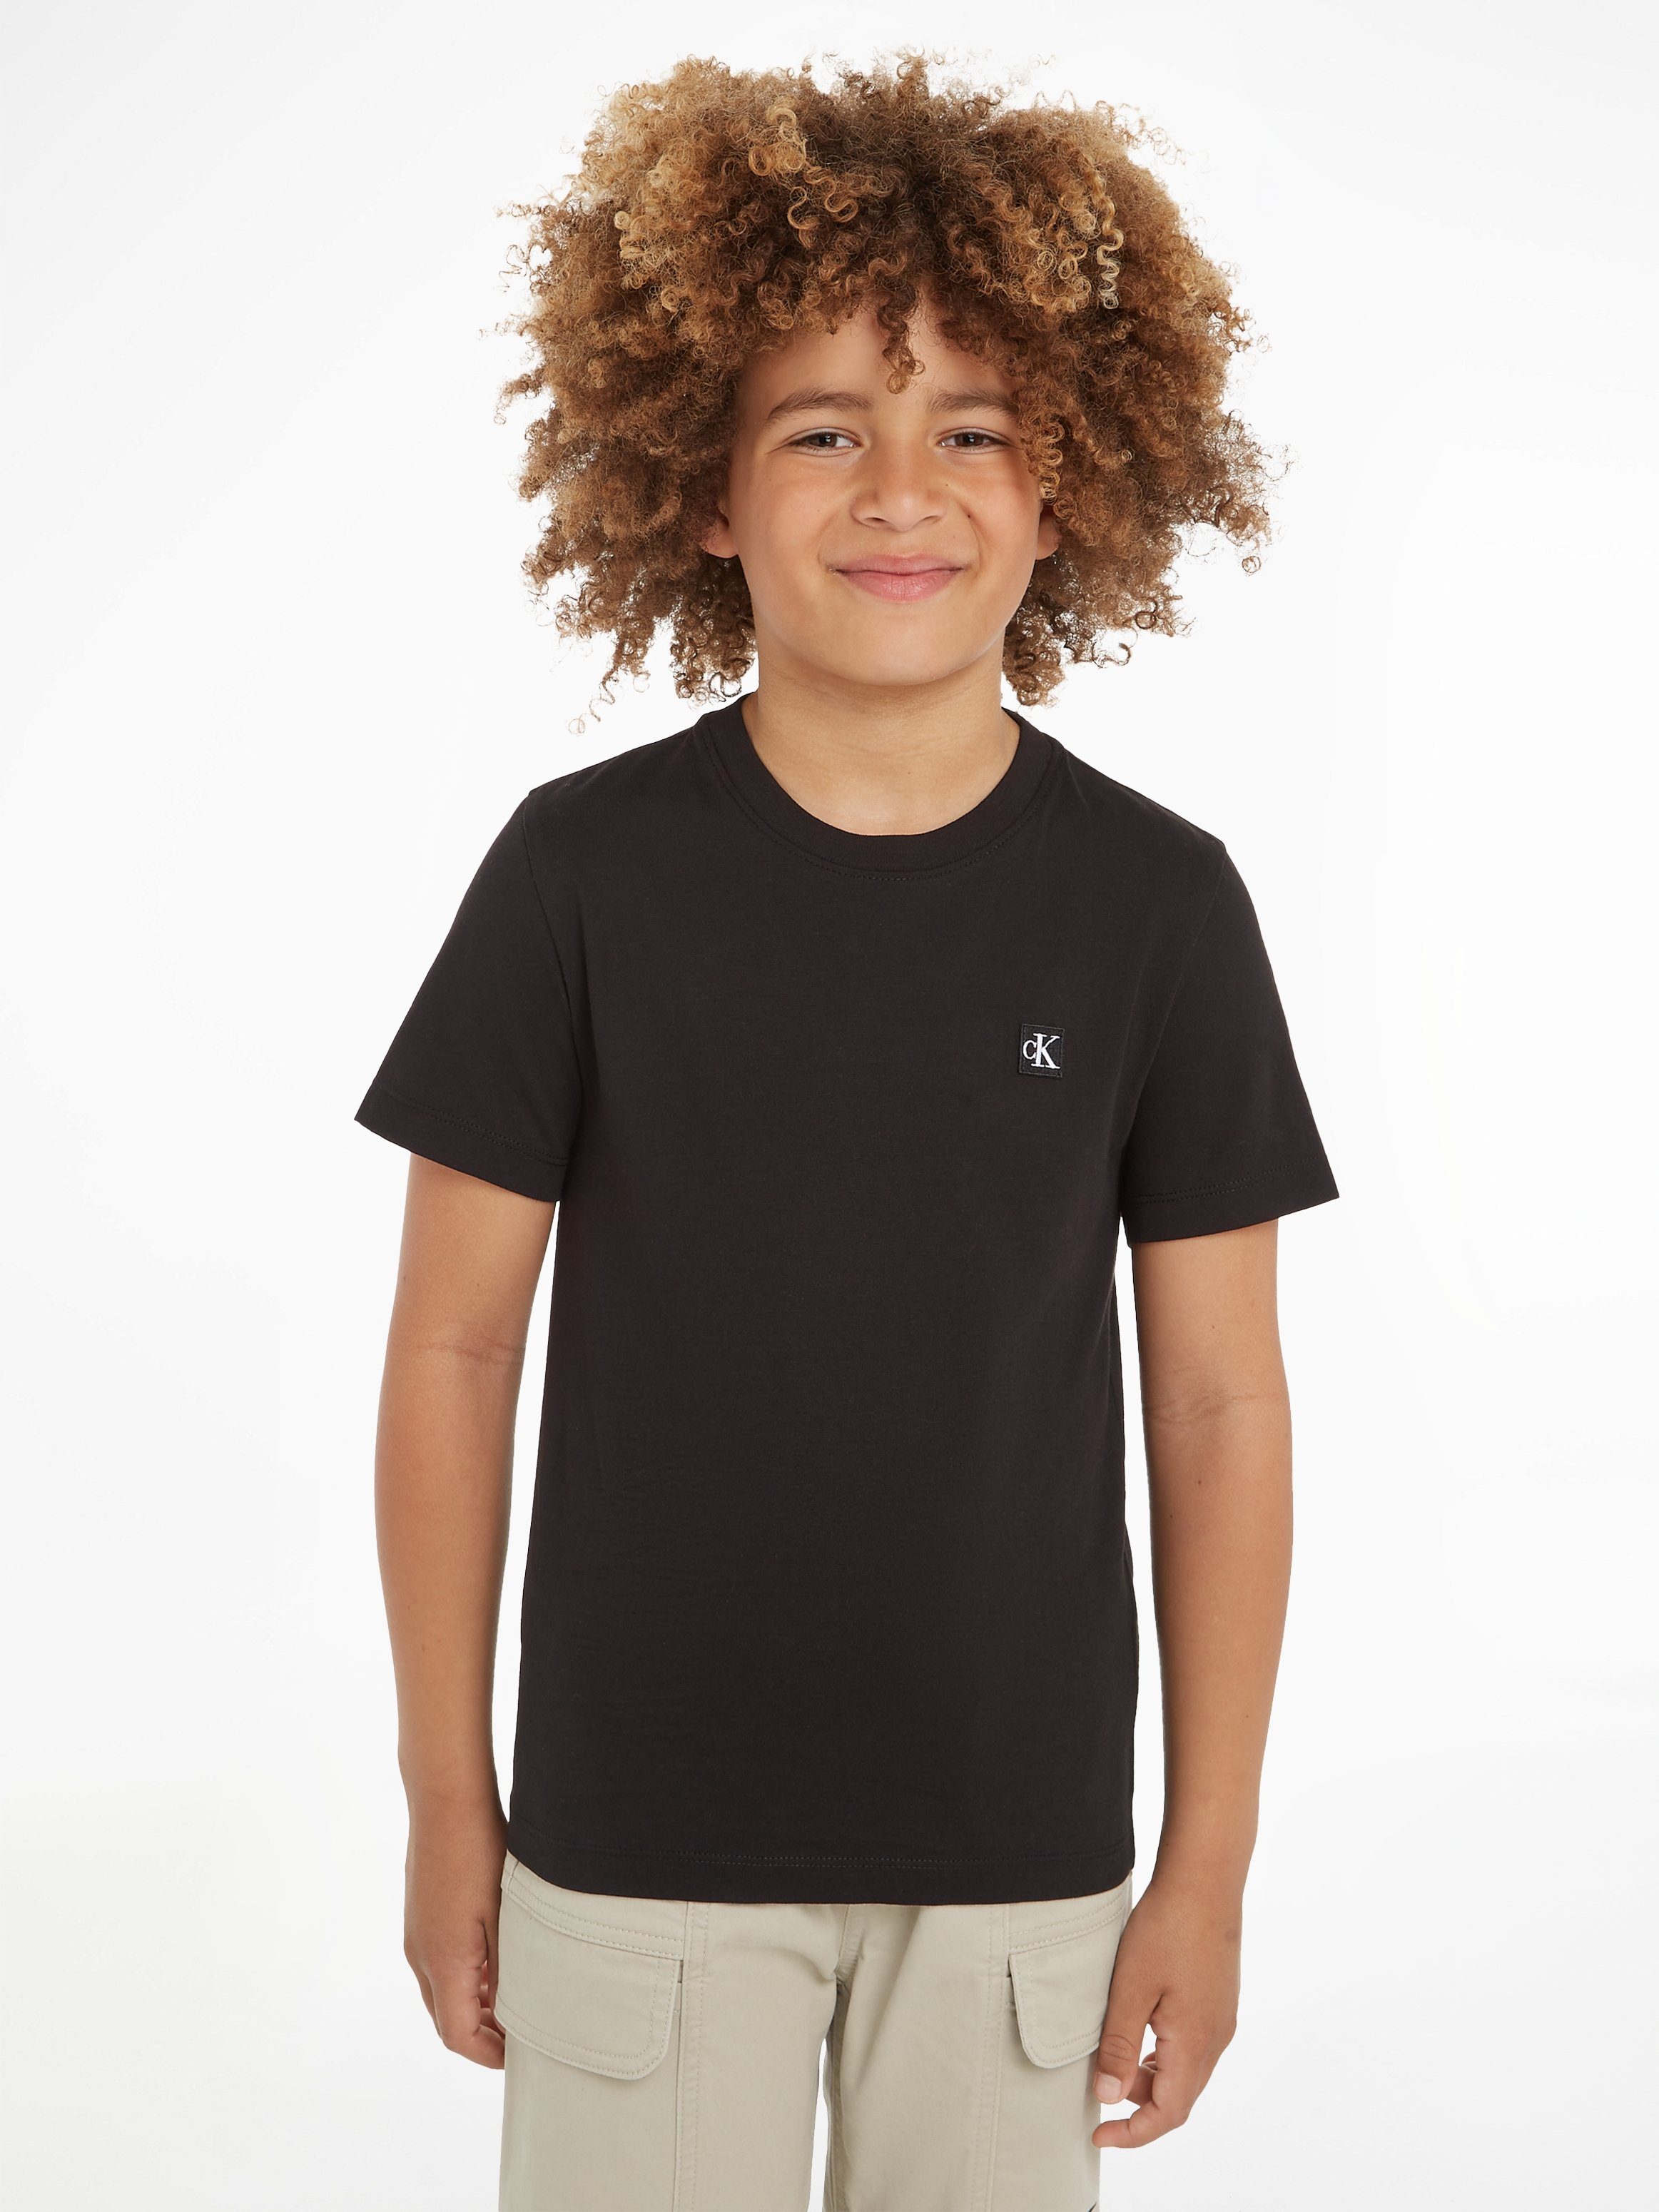 mit T-Shirt Black MINI MONOGRAM T-SHIRT Klein Logodruck BADGE Ck Jeans Calvin